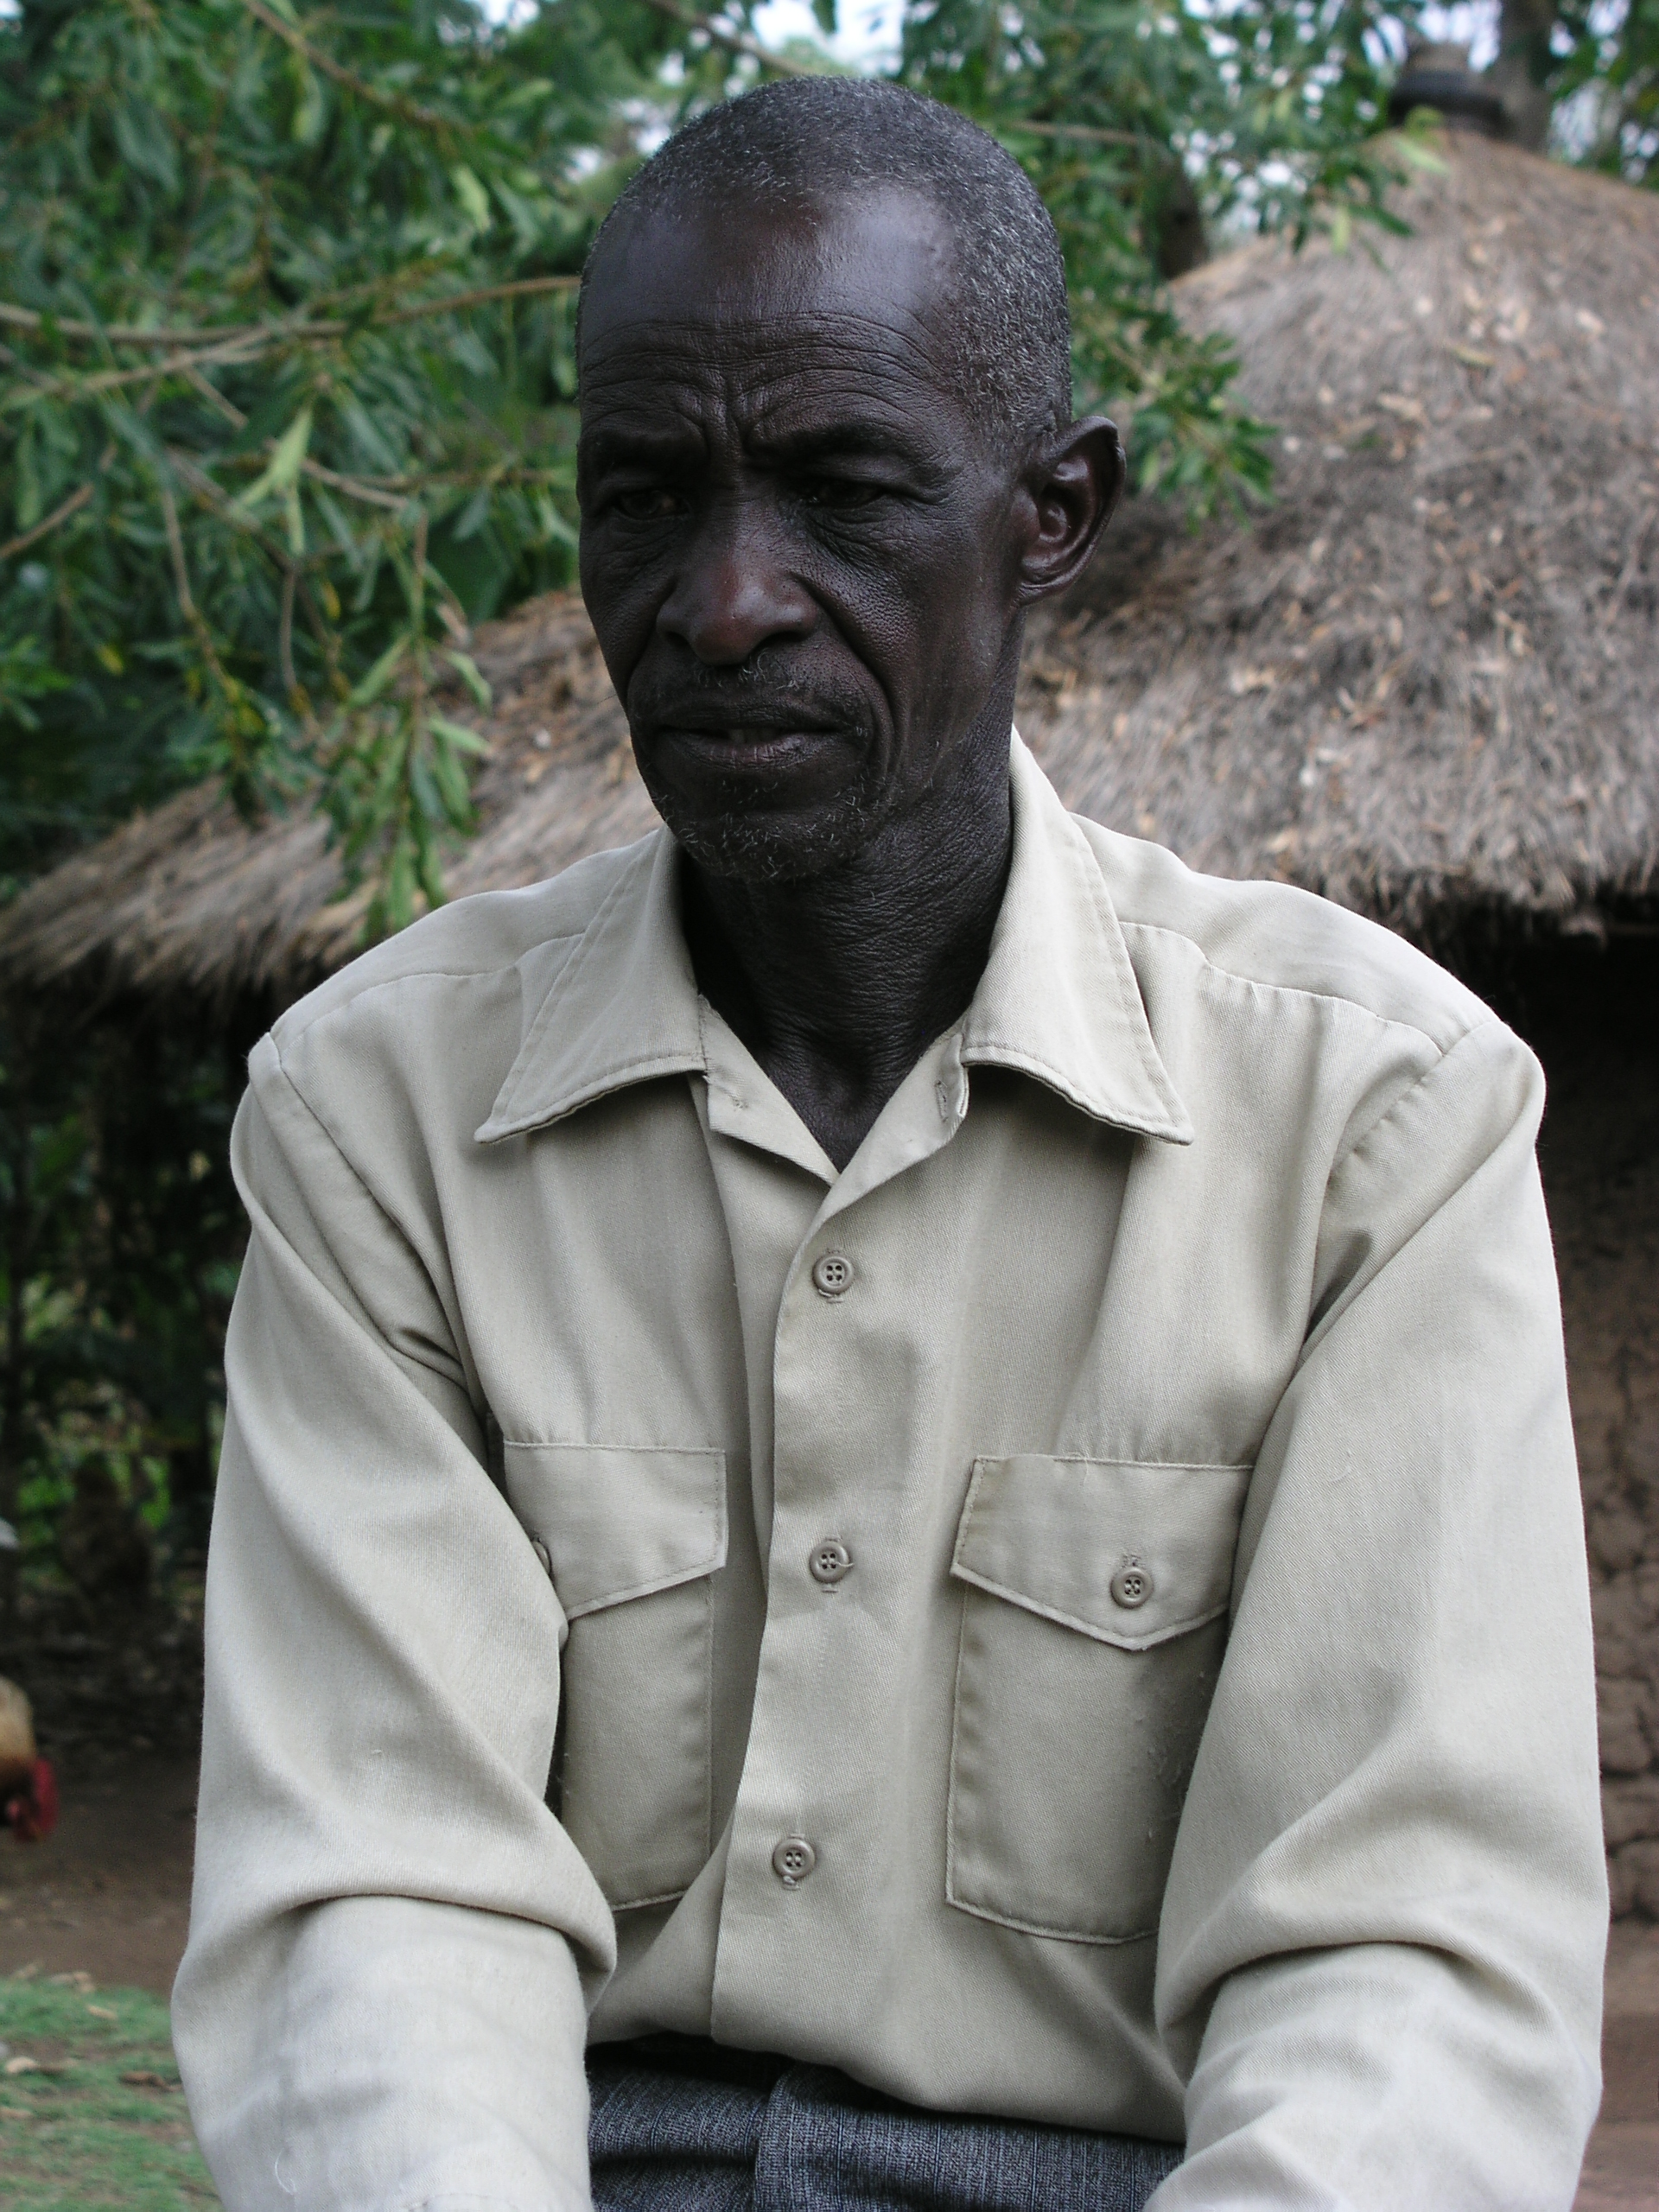 Photograph of George Wambura Gehamba at interview